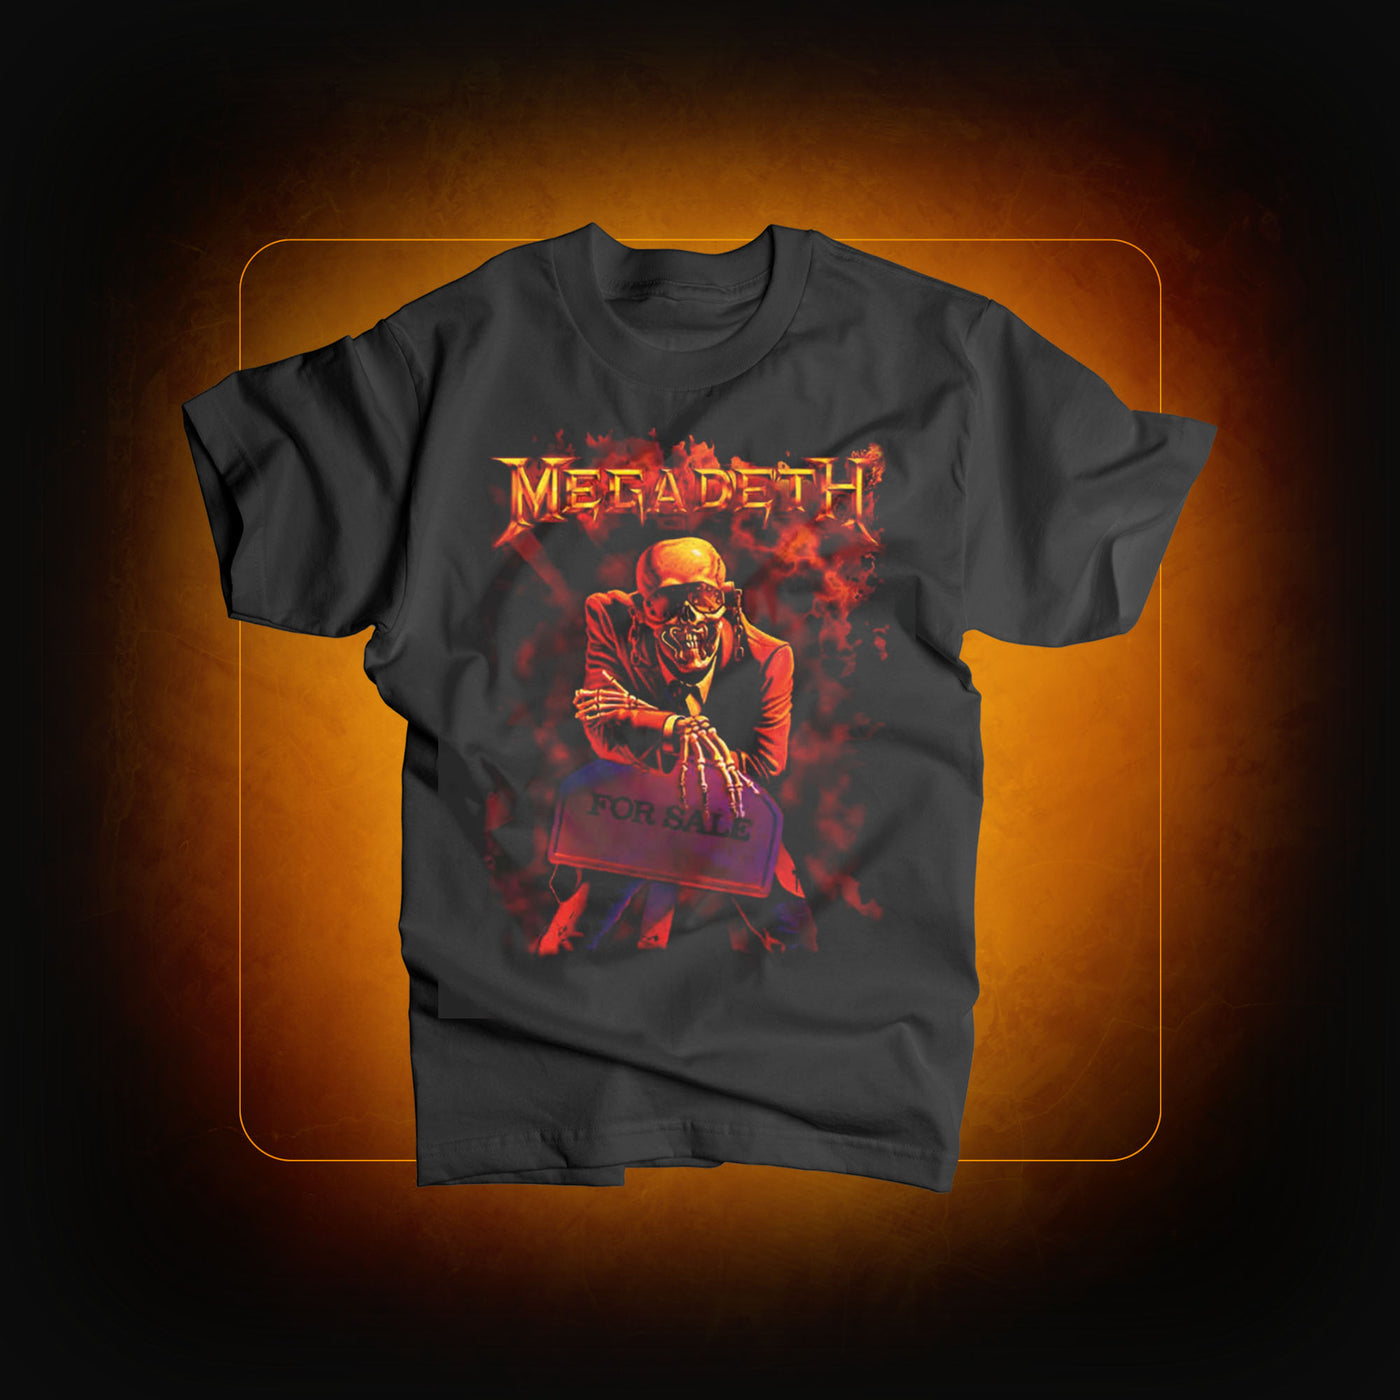 Peace Sells T-shirt - Megadeth